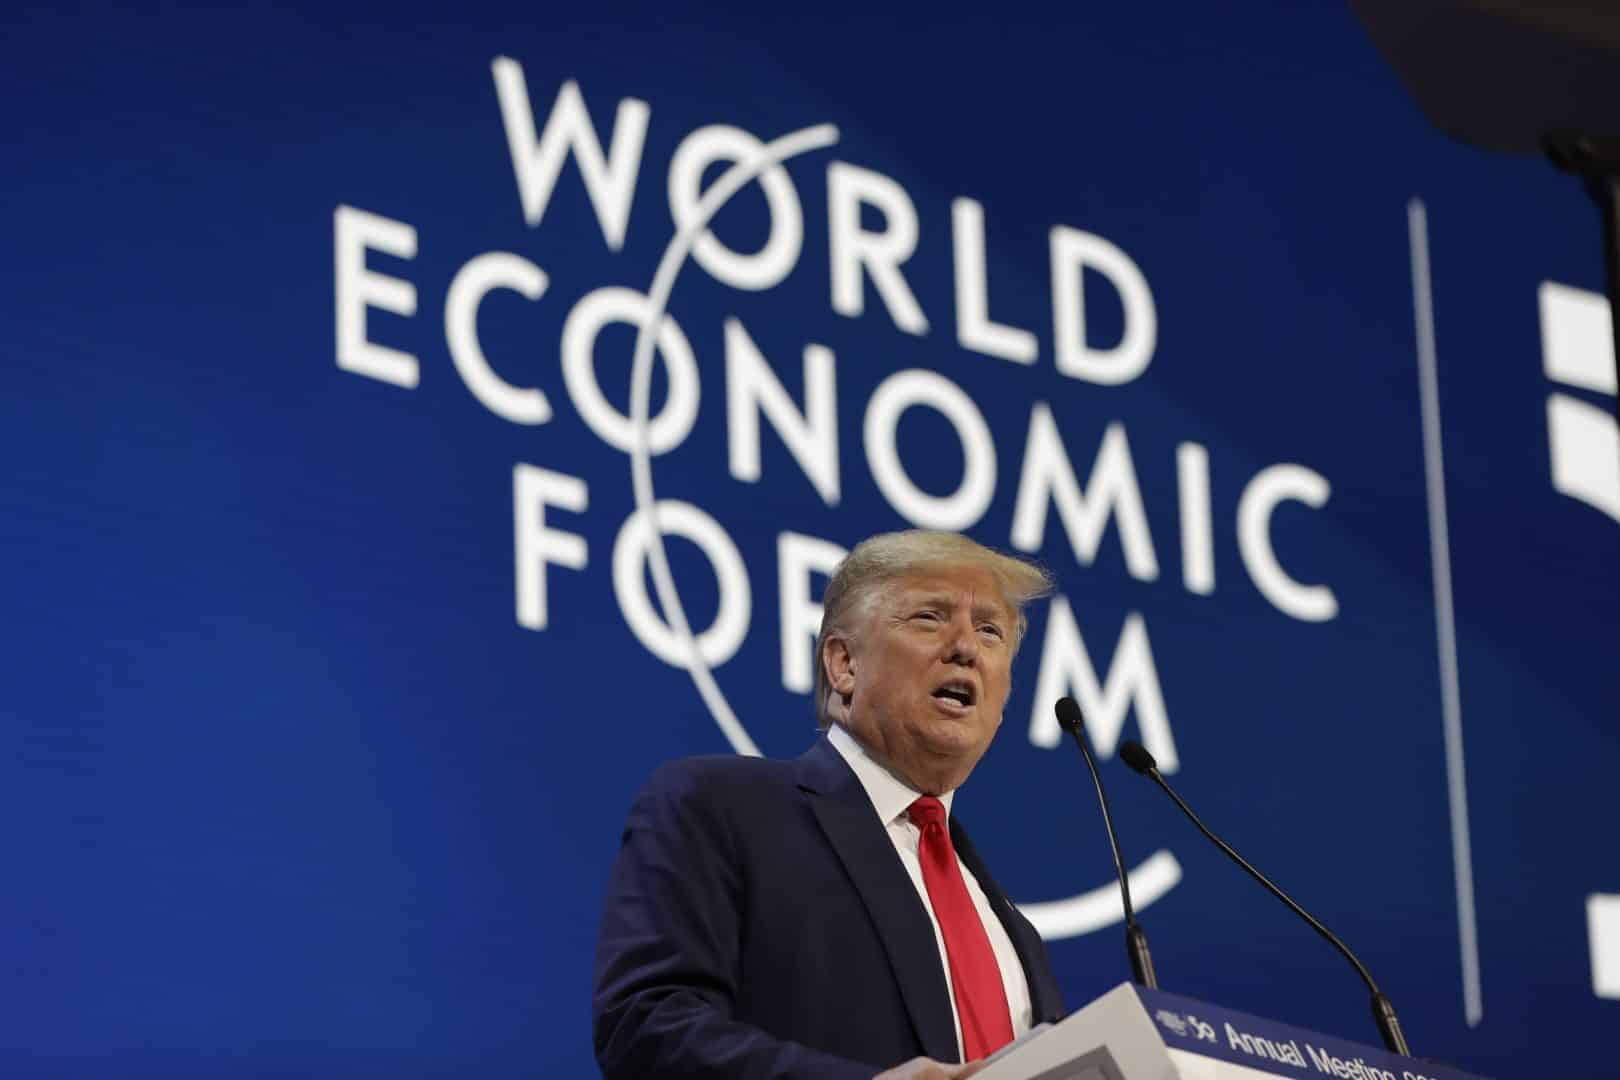 Trump addresses Davos leaders amid escalating trade tariff disputes and impeachment trial